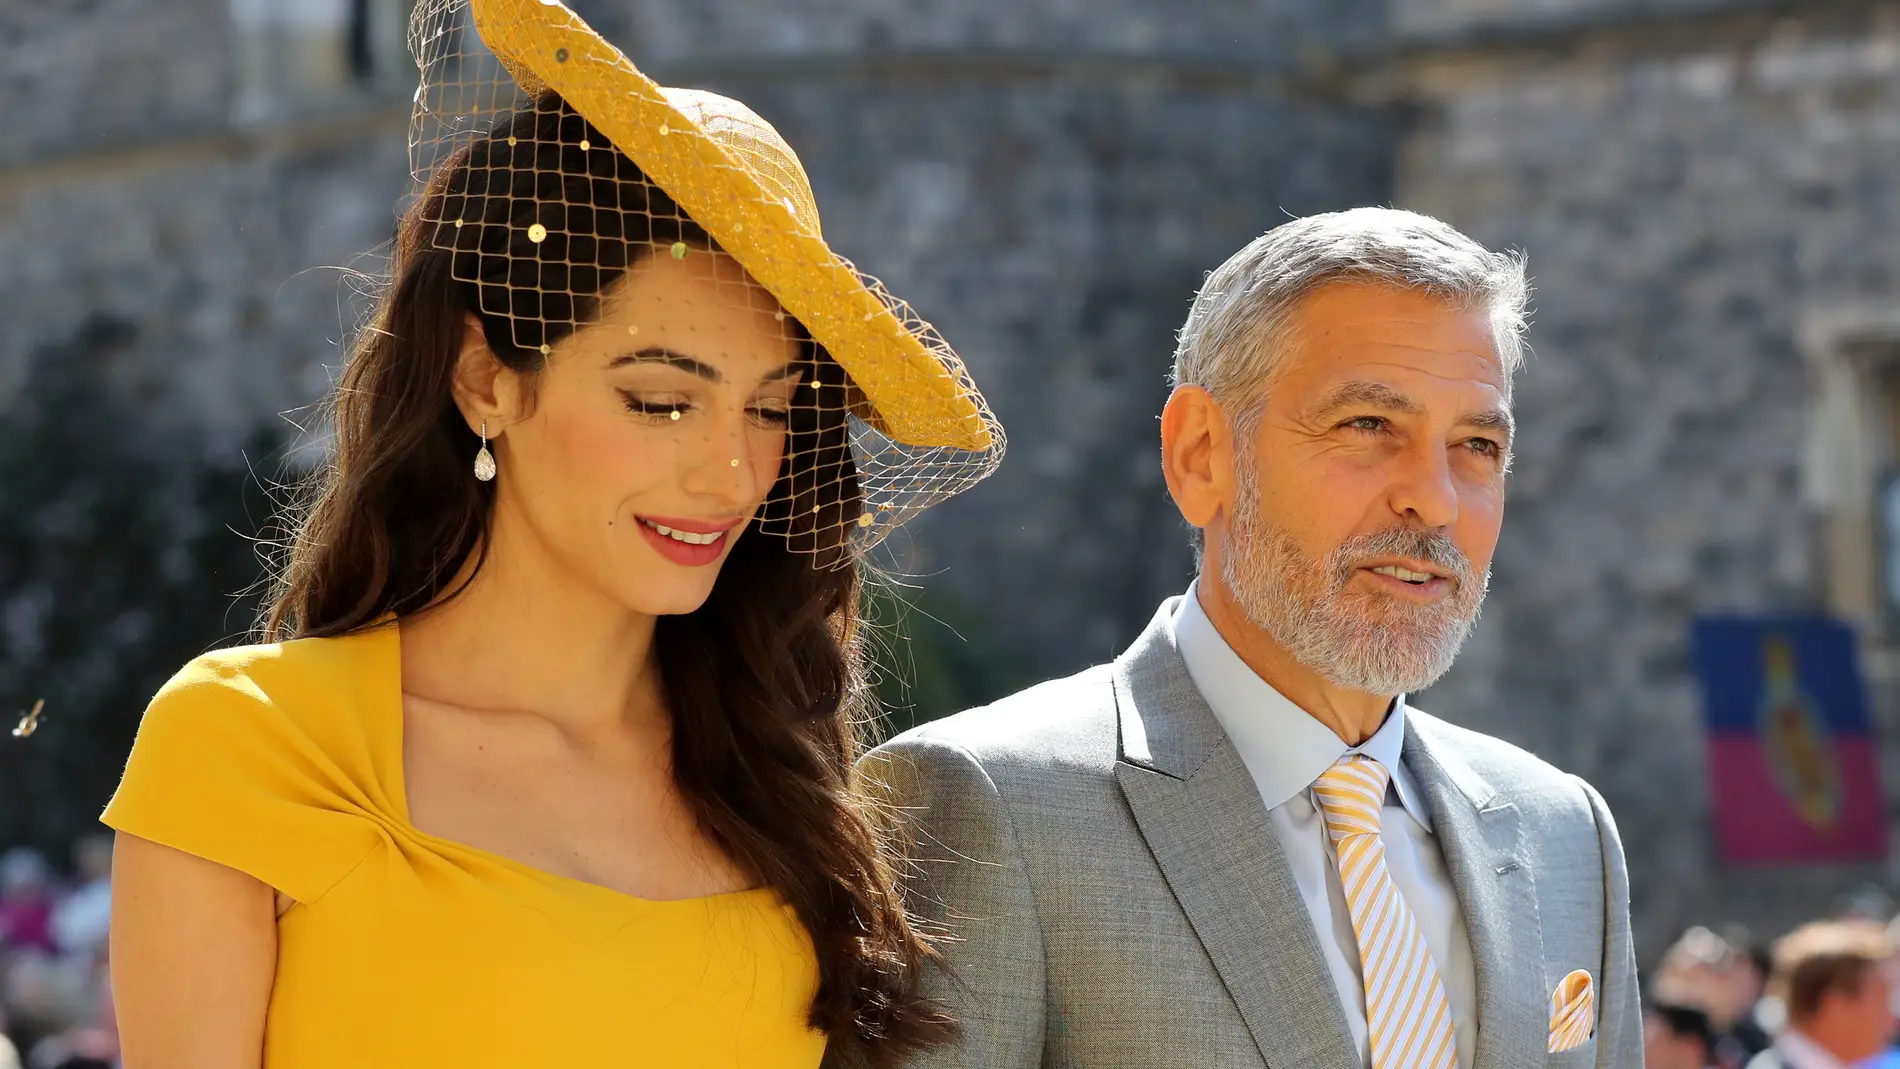 El matrimonio Clooney a su llegada a Windsor